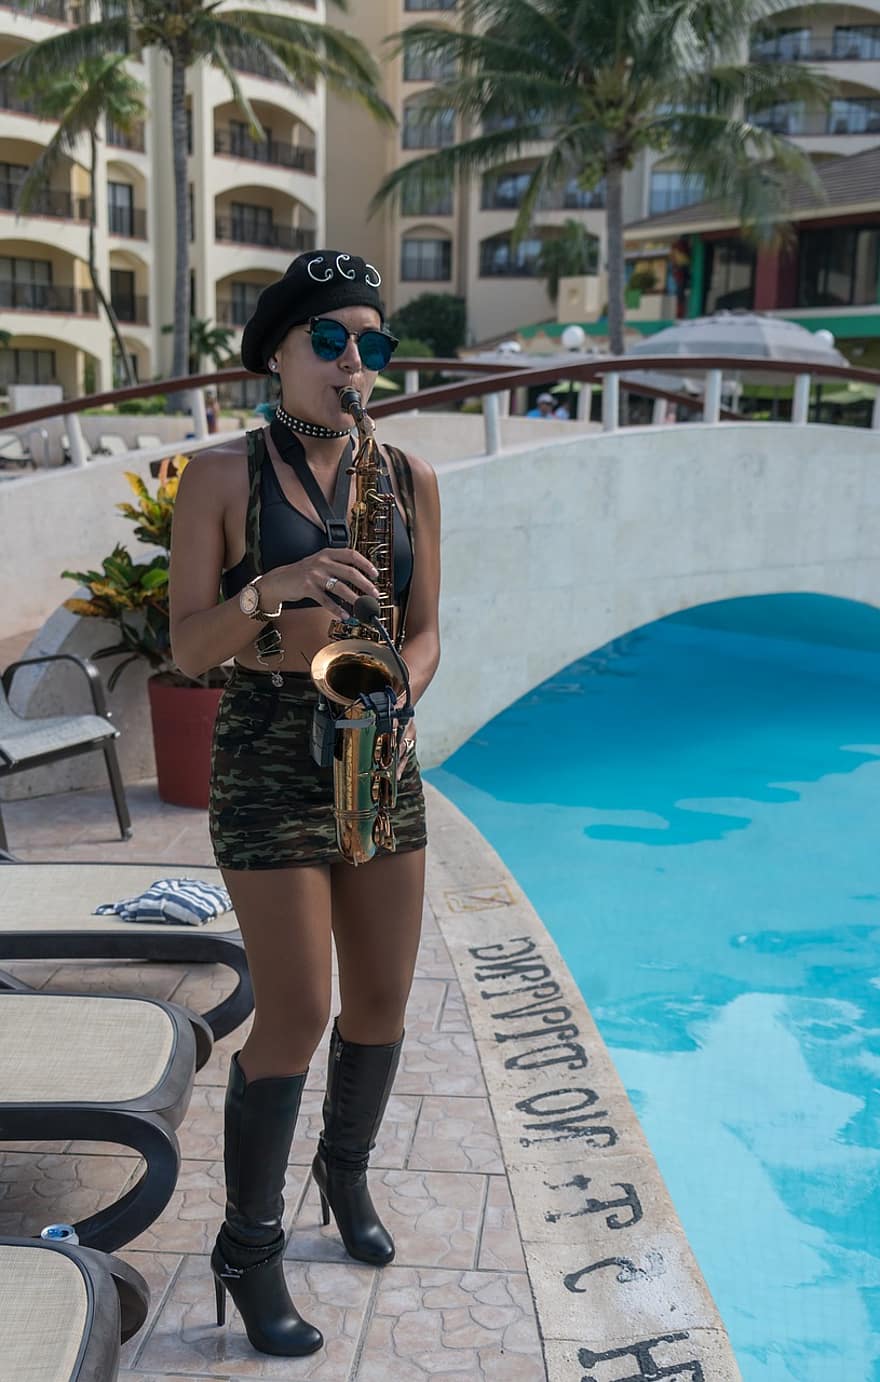 pemain saksofon, musik, kinerja, di tepi kolam renang, pesta, orang-orang